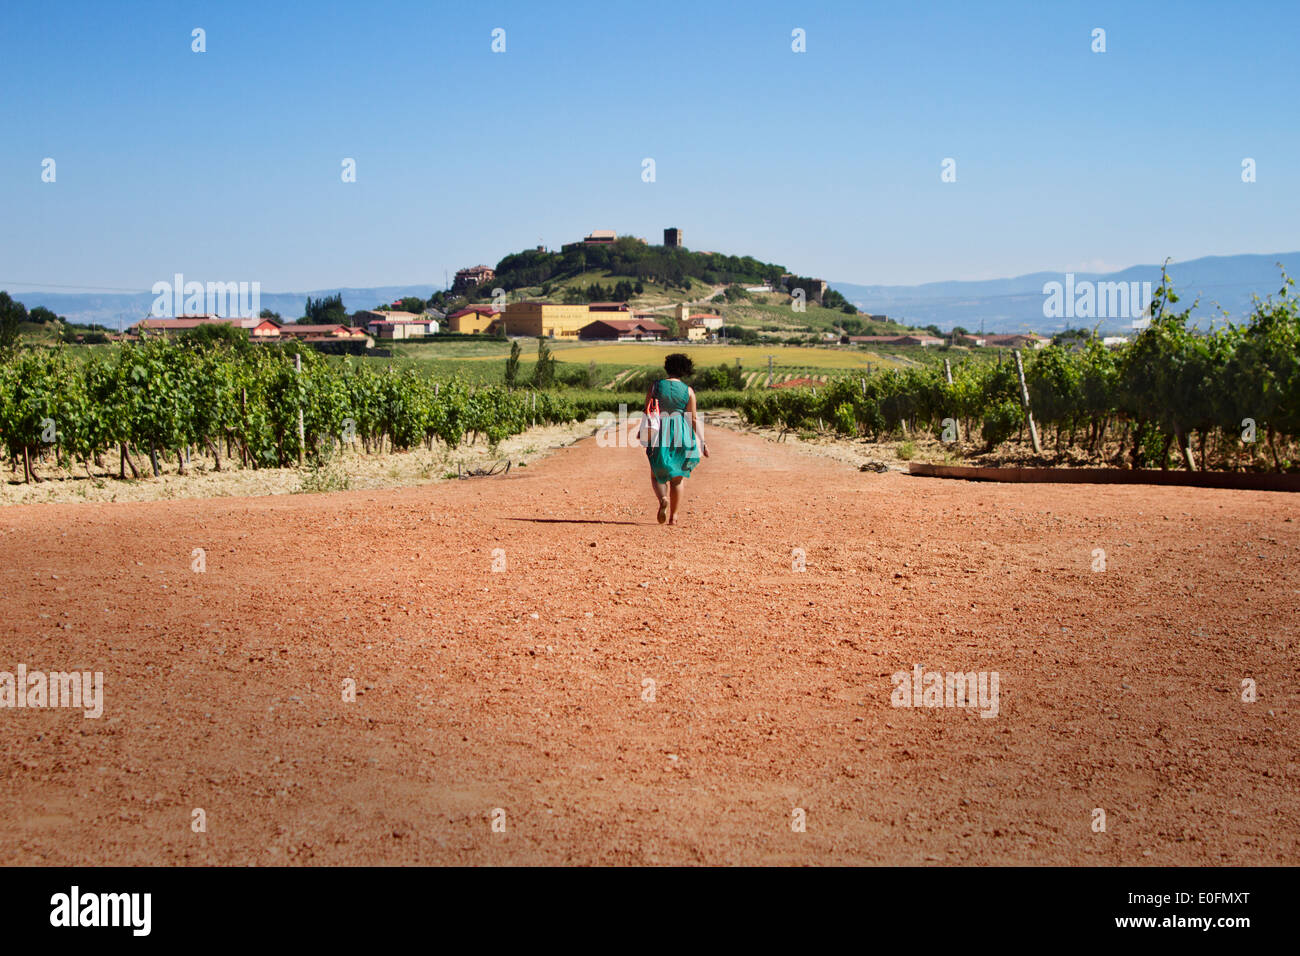 Europe, Spain, Rioja, Laguardia, Girl, Walk, Land, Sun, Calatrava, Wine, Winery, Vineyard, Relax Stock Photo